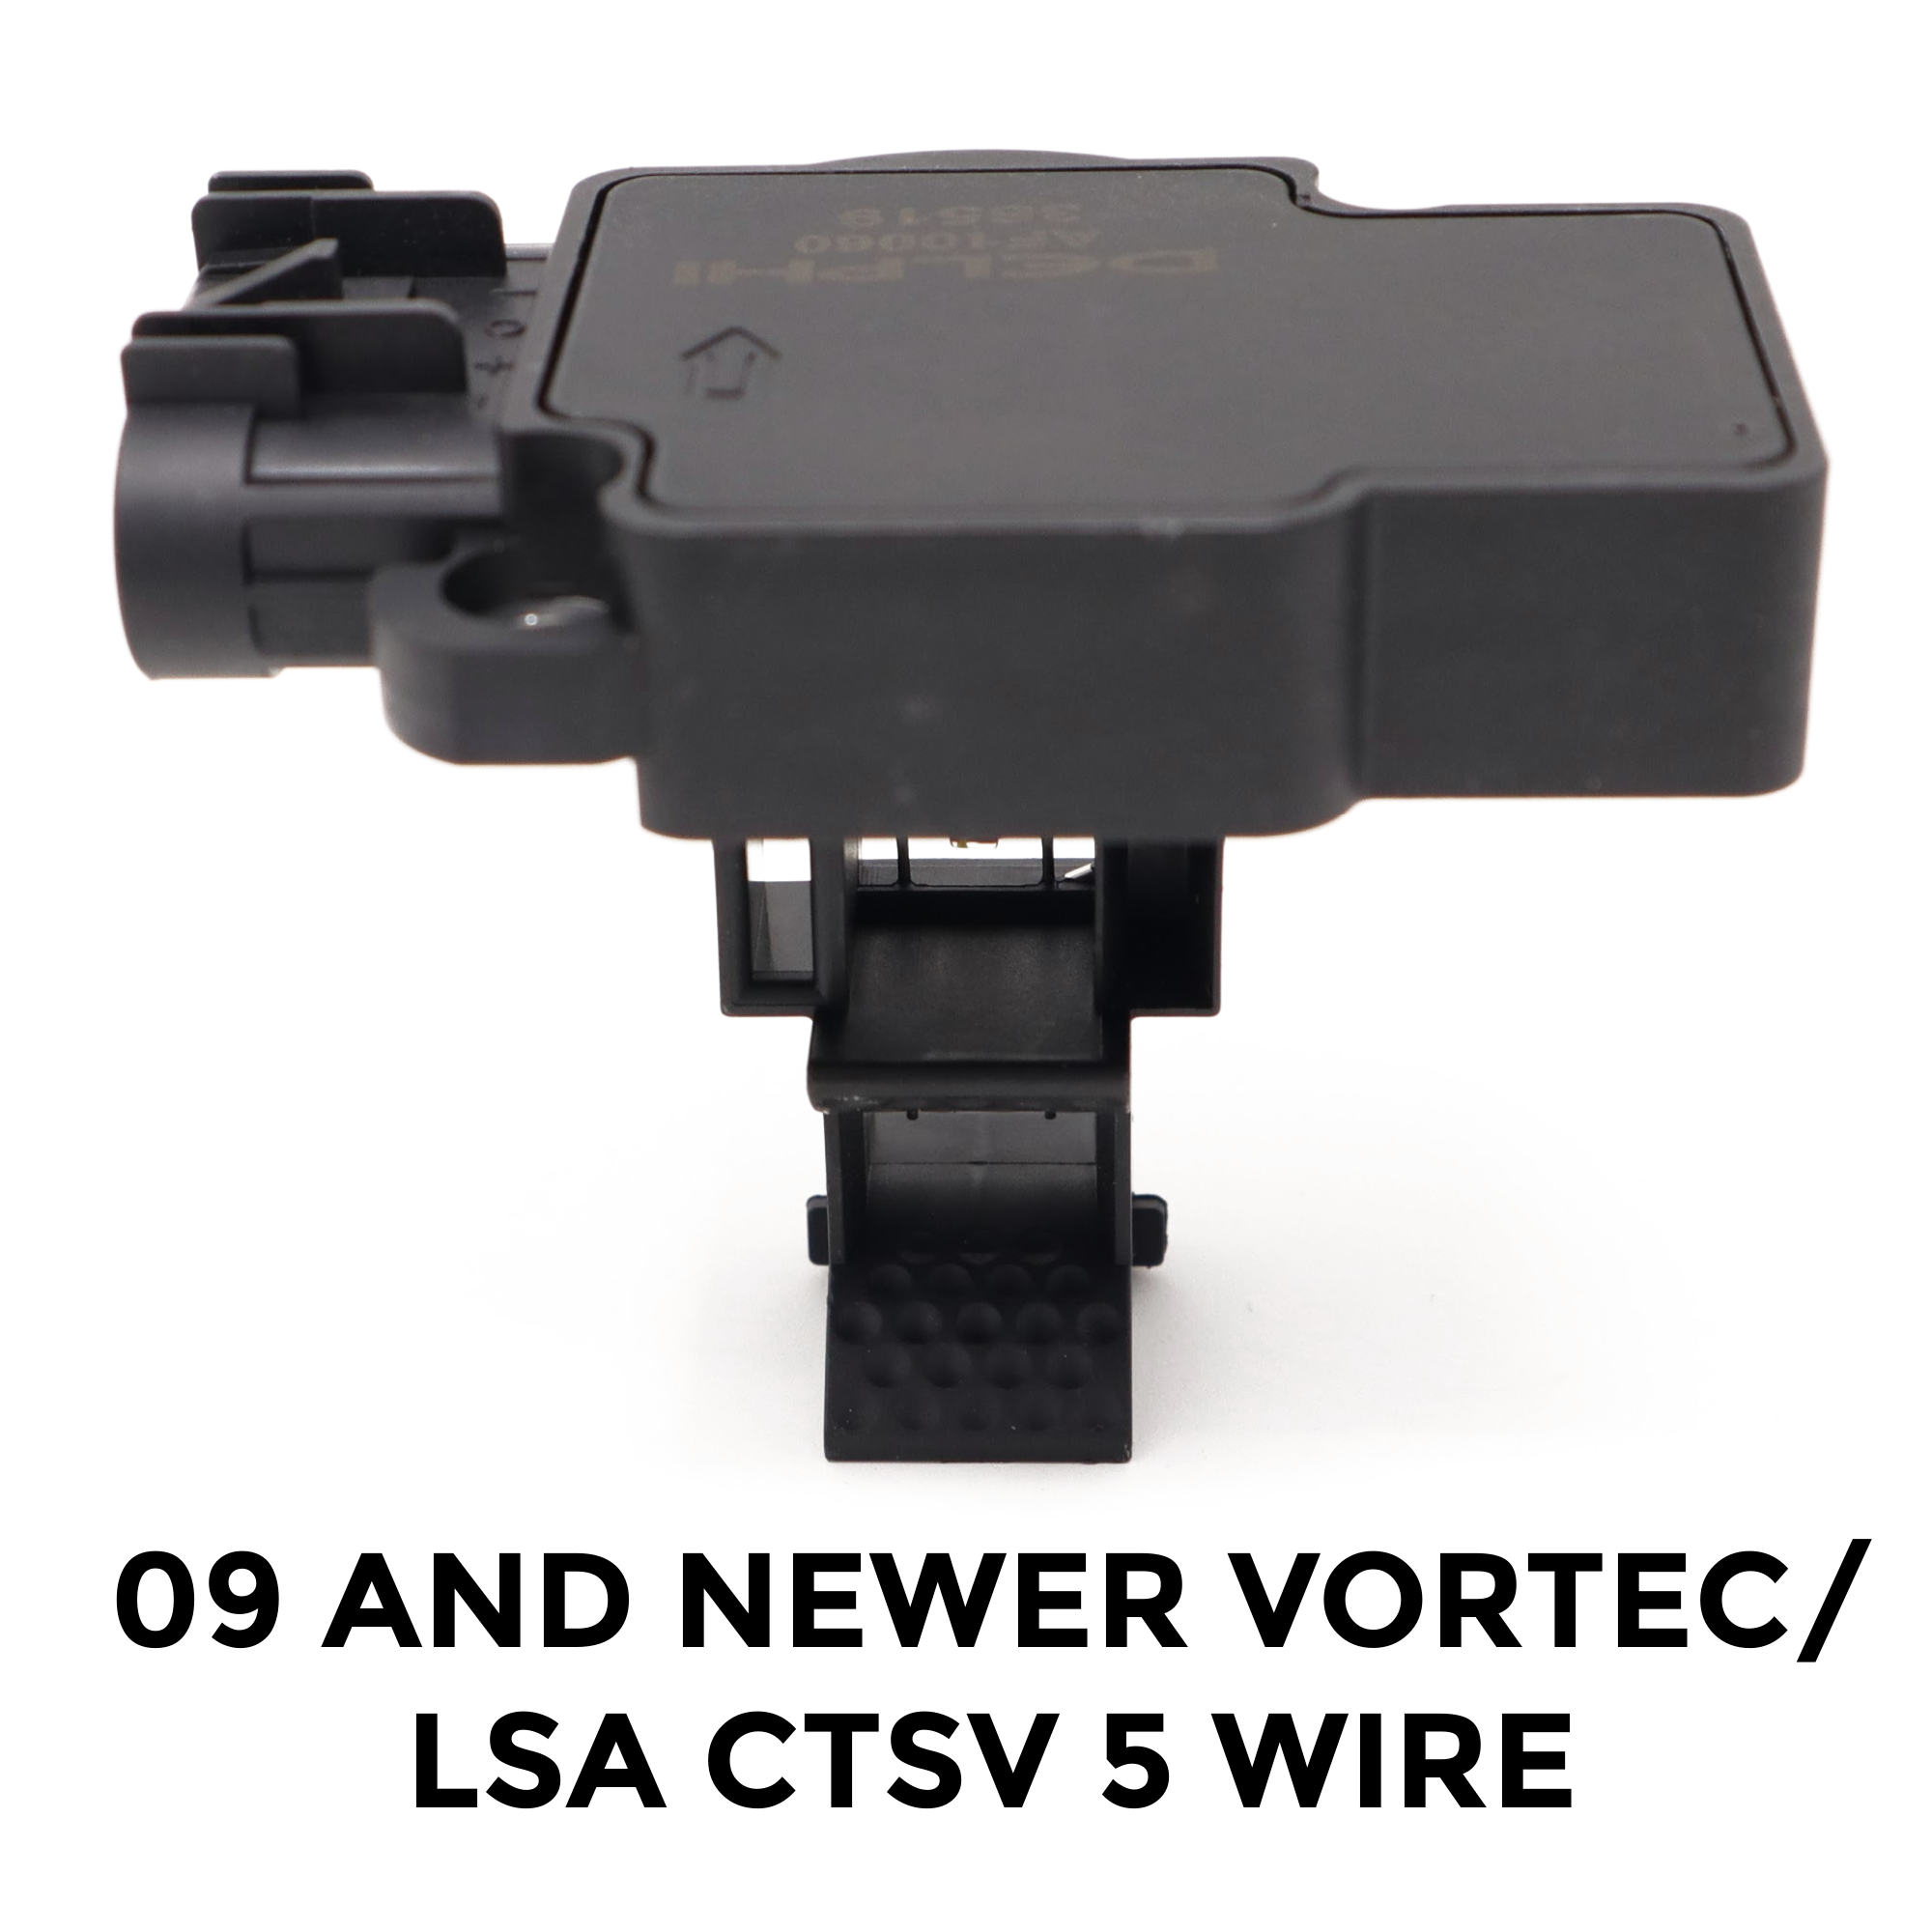 09 and Newer Vortec/LSA CTSV